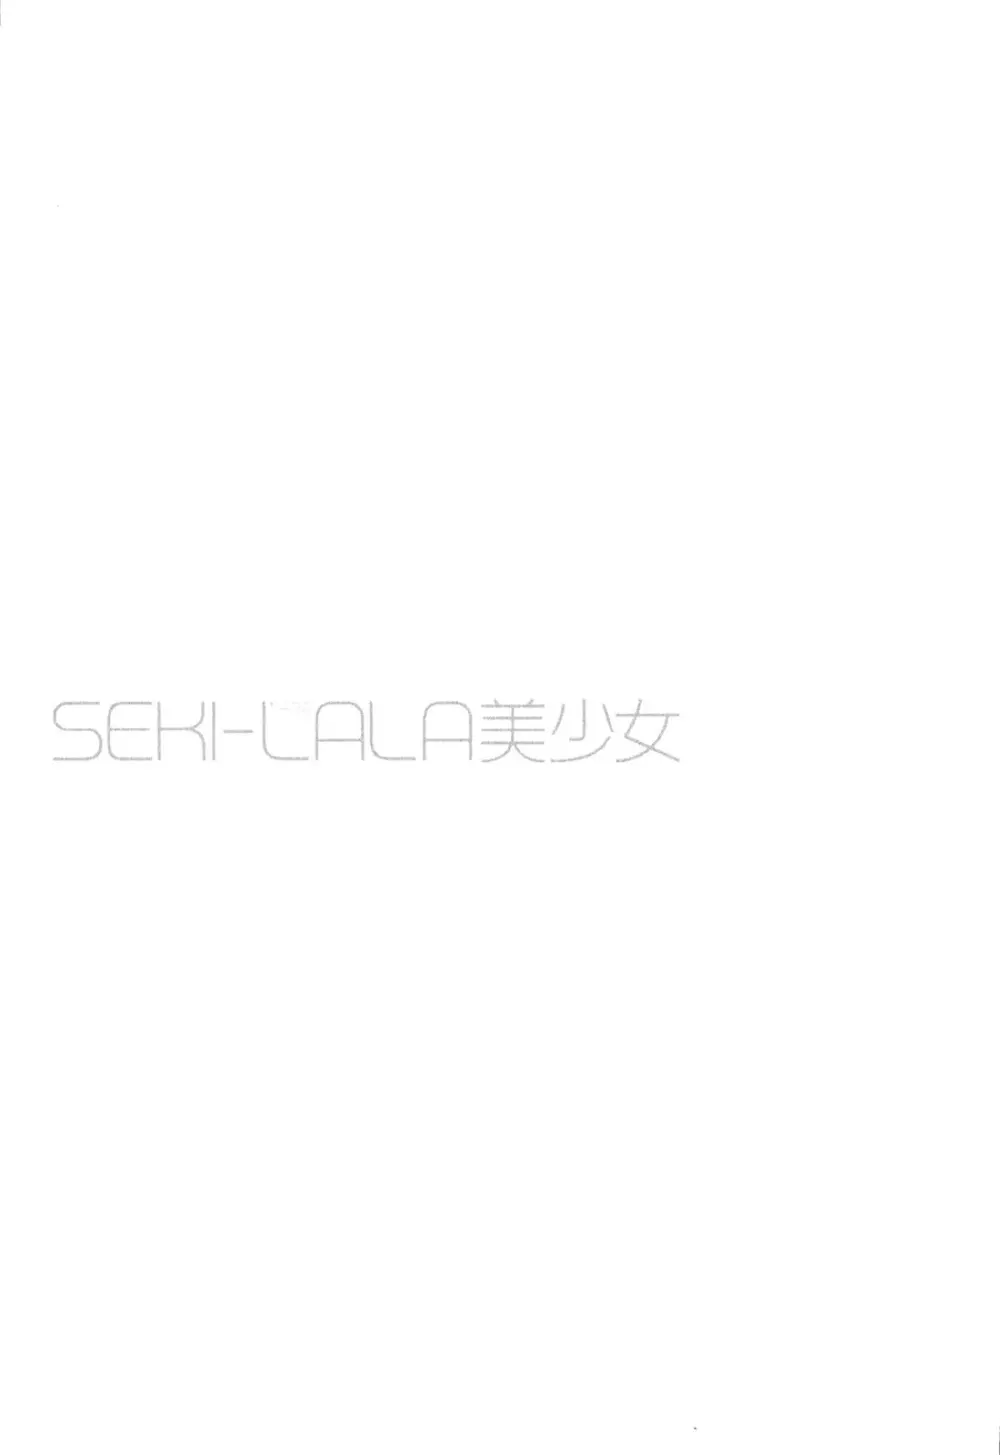 SEKI-LALA美少女 140ページ